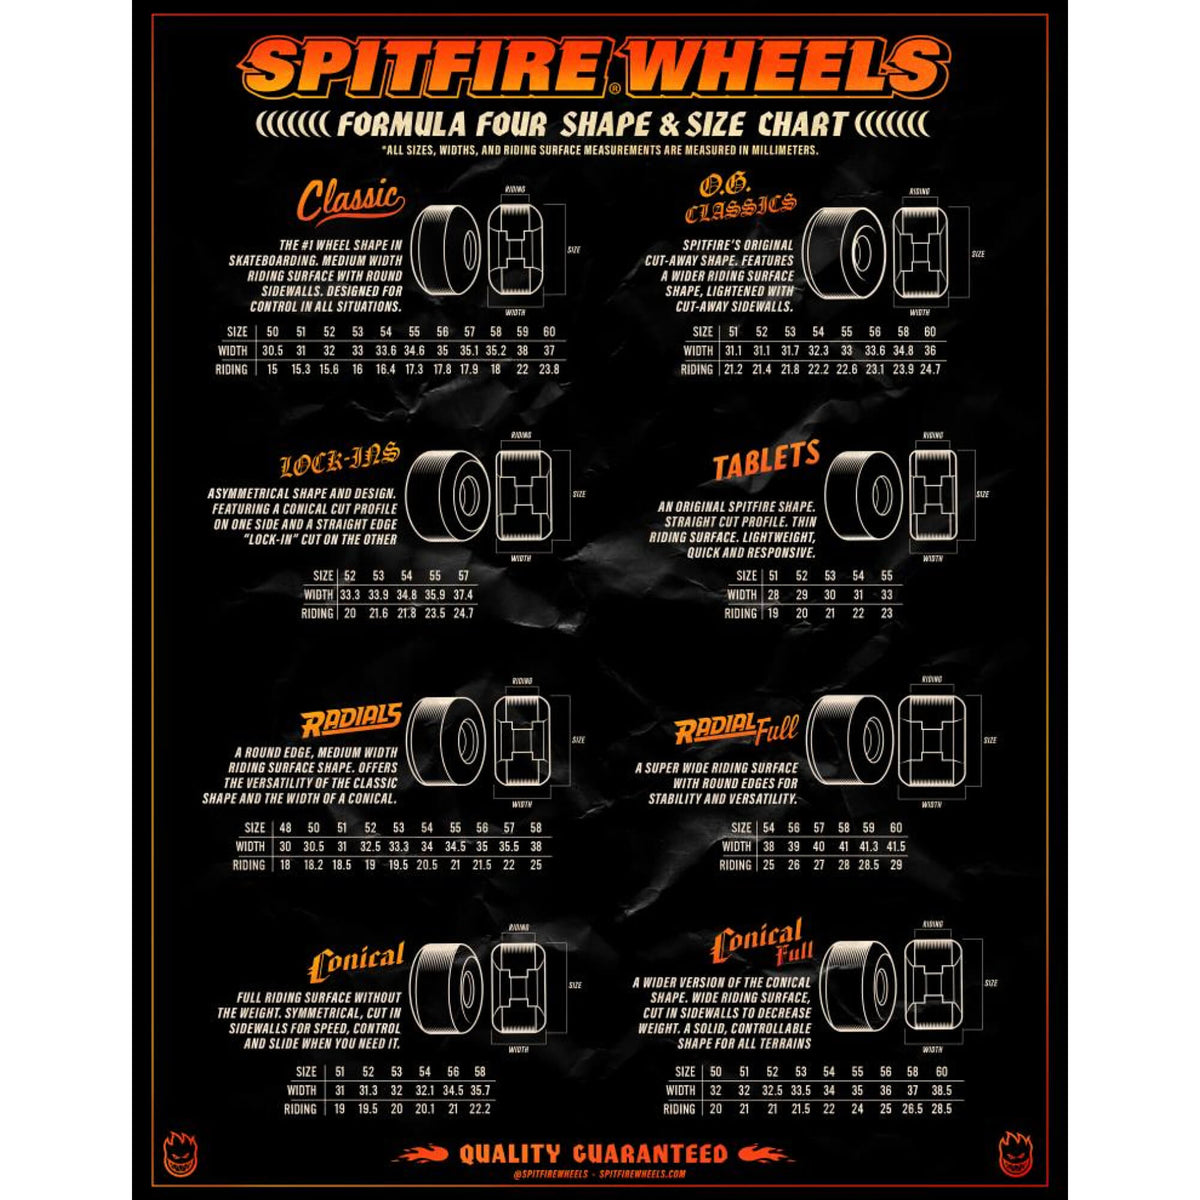 Spitfire Wheels Shape Guide